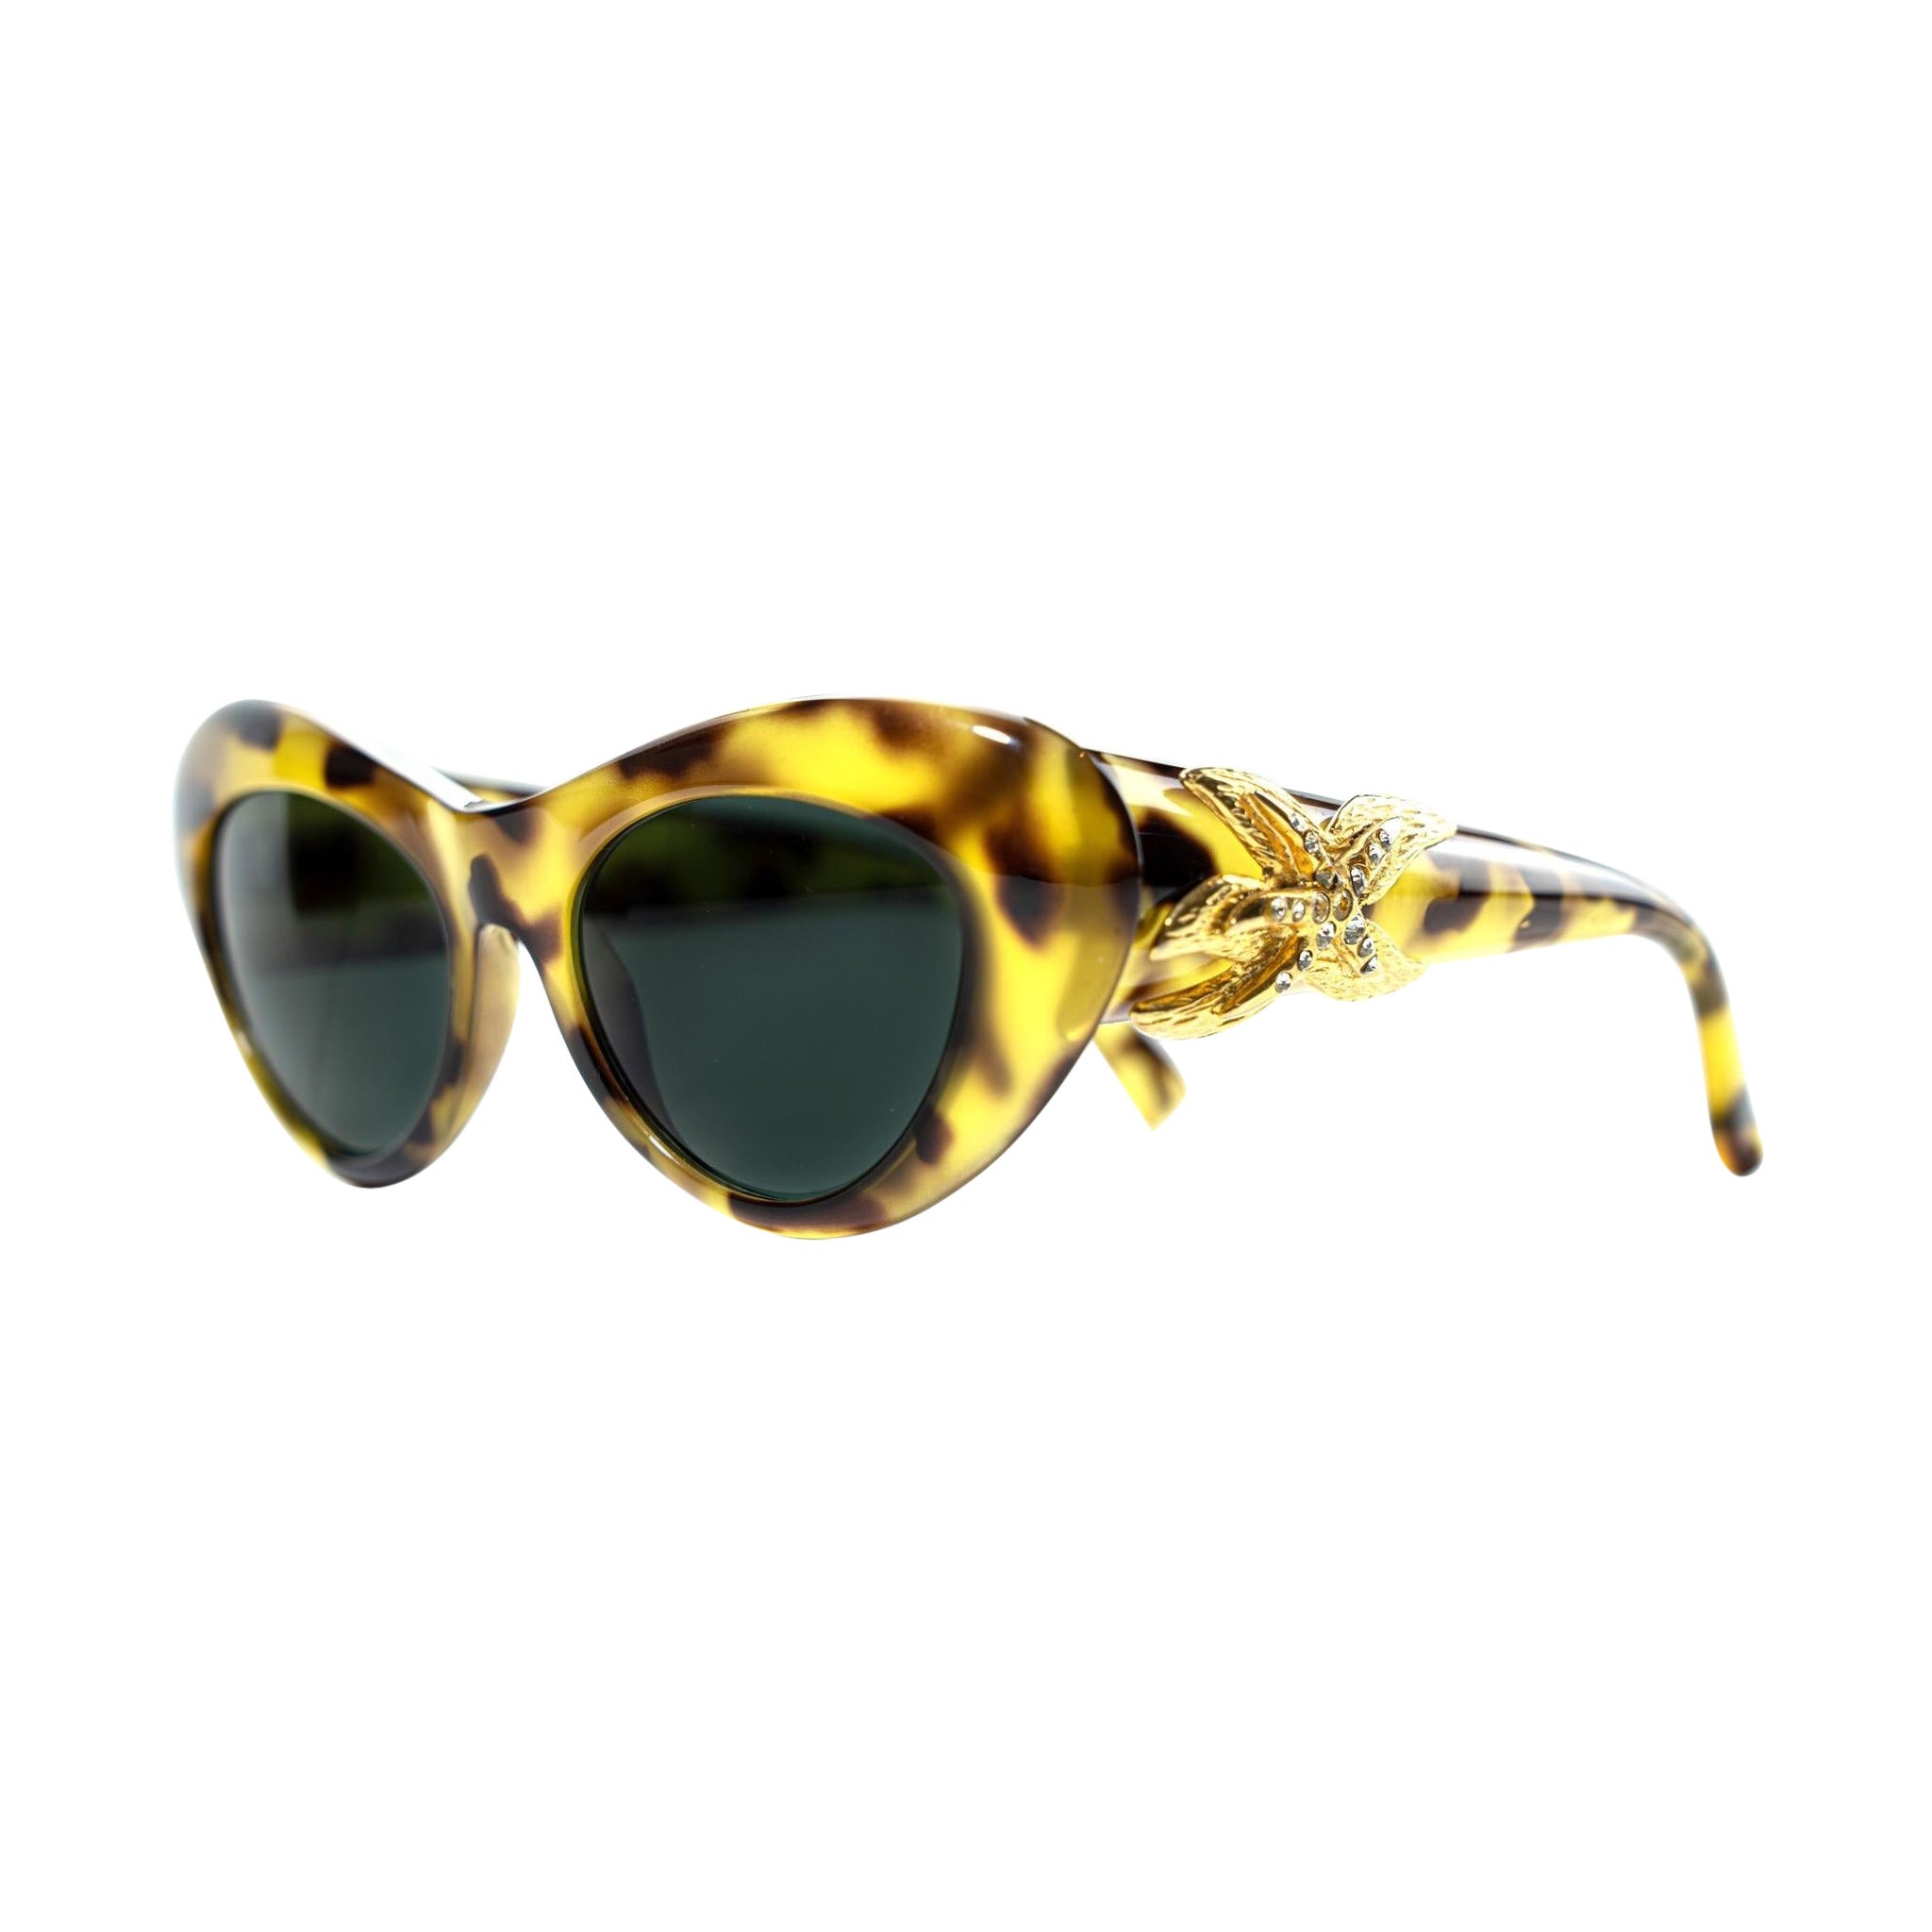 Gianni Versace 80s oval cat-eyes tortoise sunglasses 